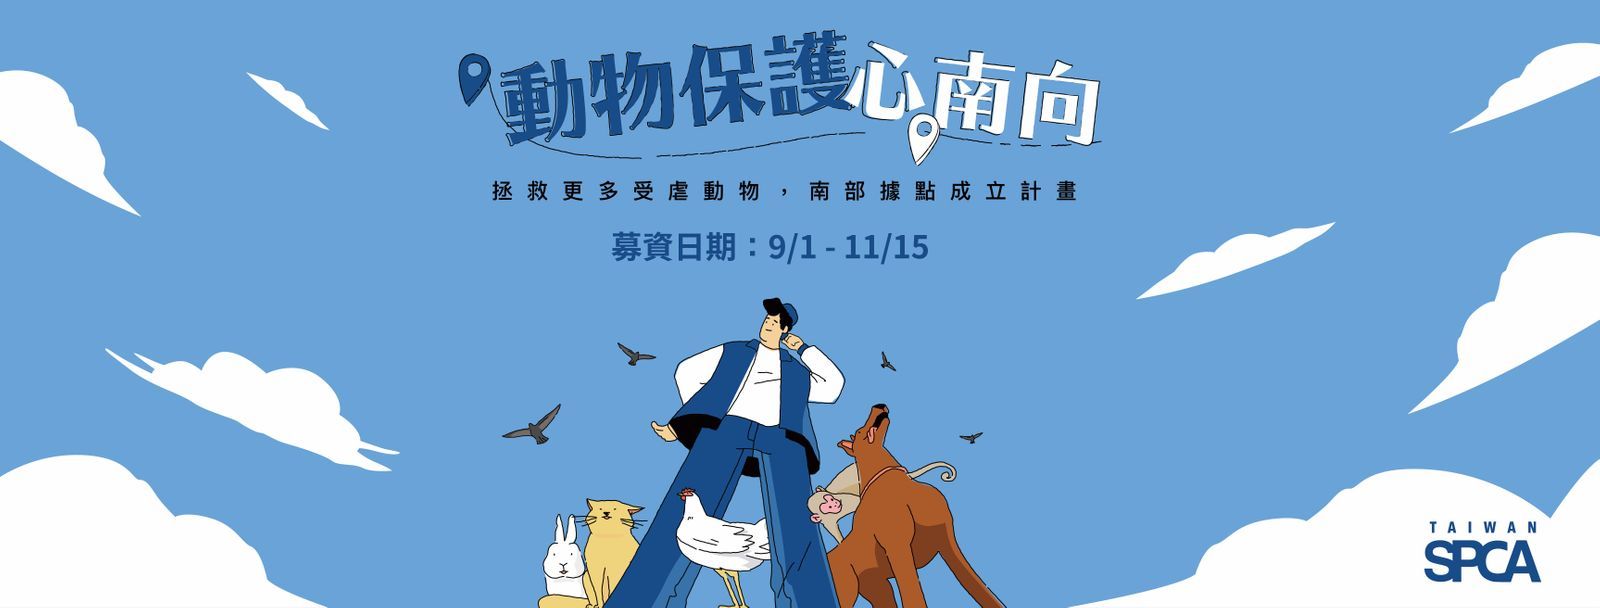 【 Taiwan SPCA 動物保護心南向-南部據點成立募資計畫 9/1正式啟動】